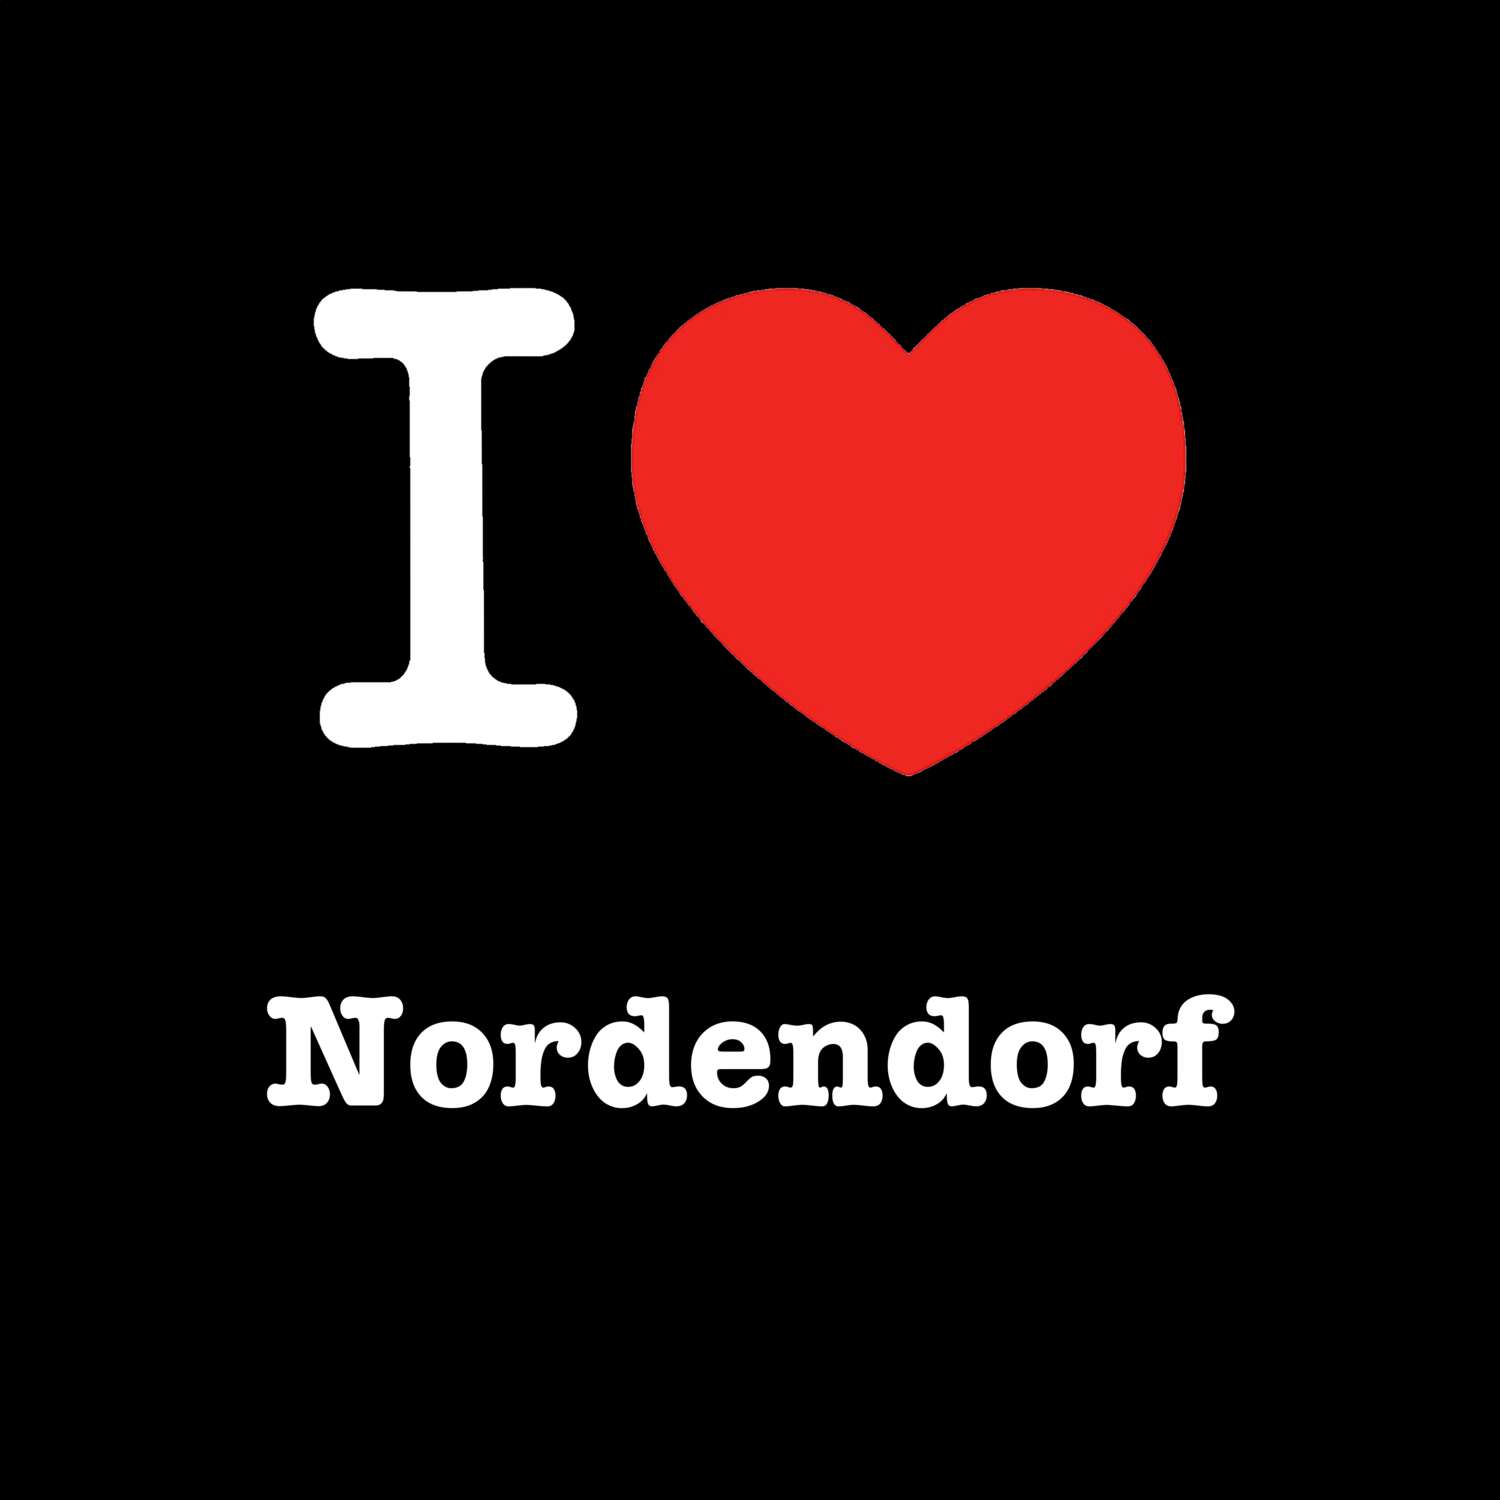 Nordendorf T-Shirt »I love«